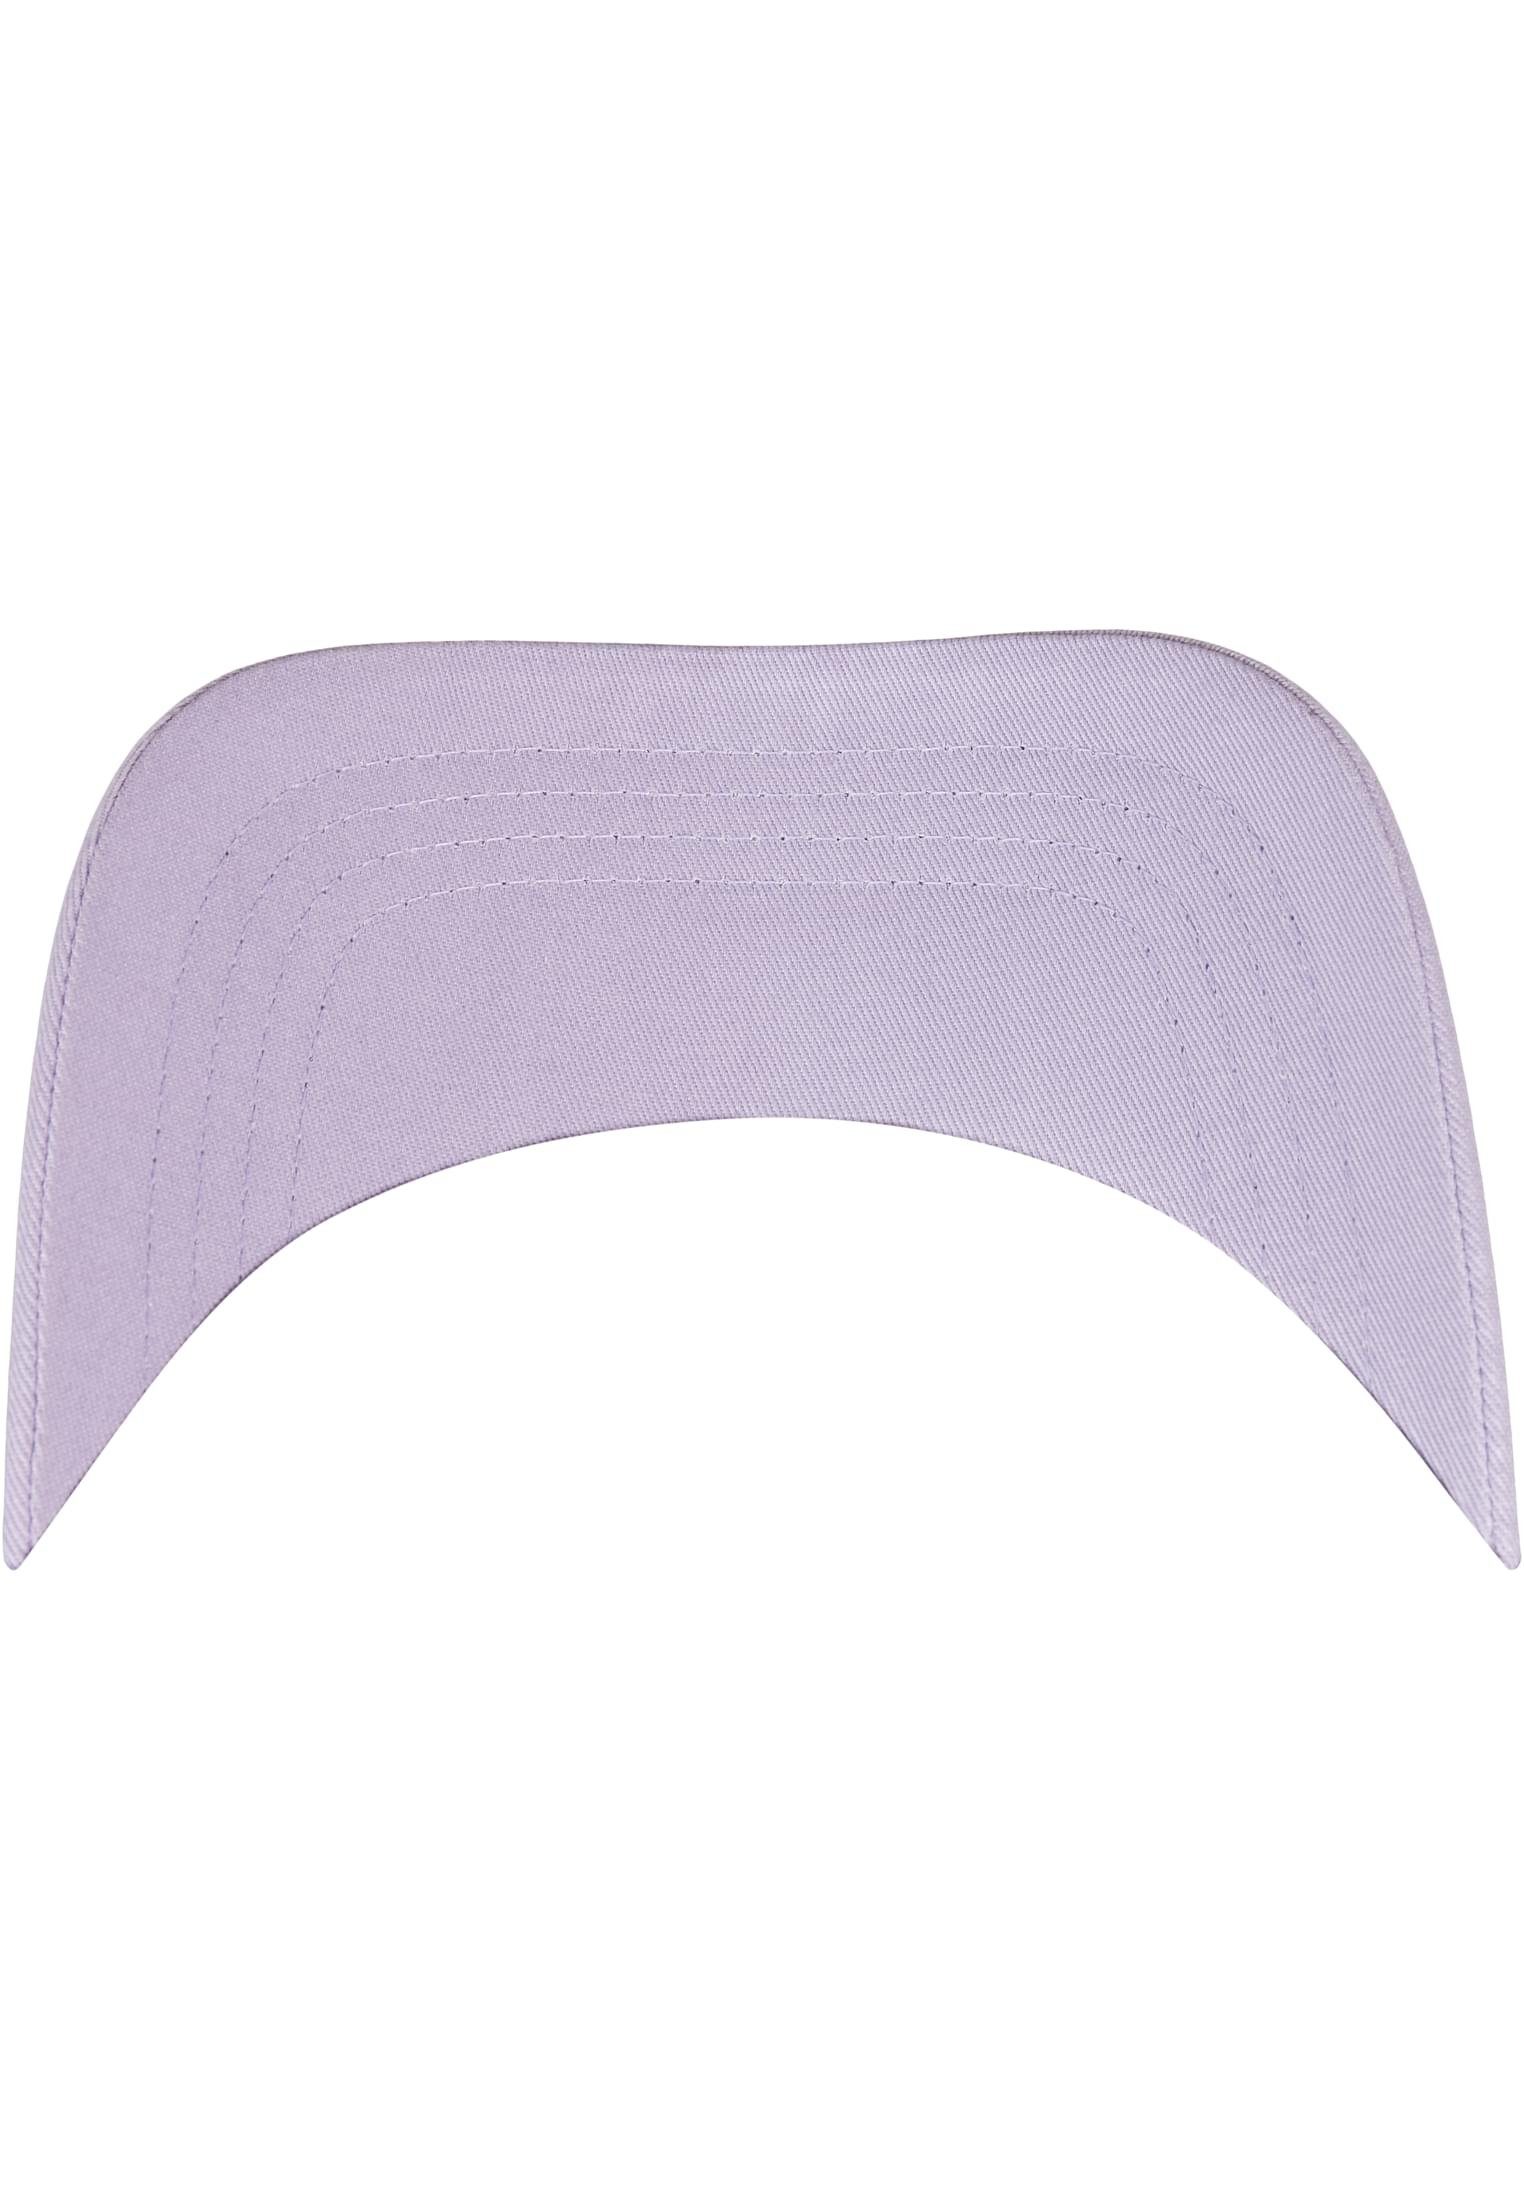 Cap Cap Visor Curved Flex lilac Flexfit Accessoires